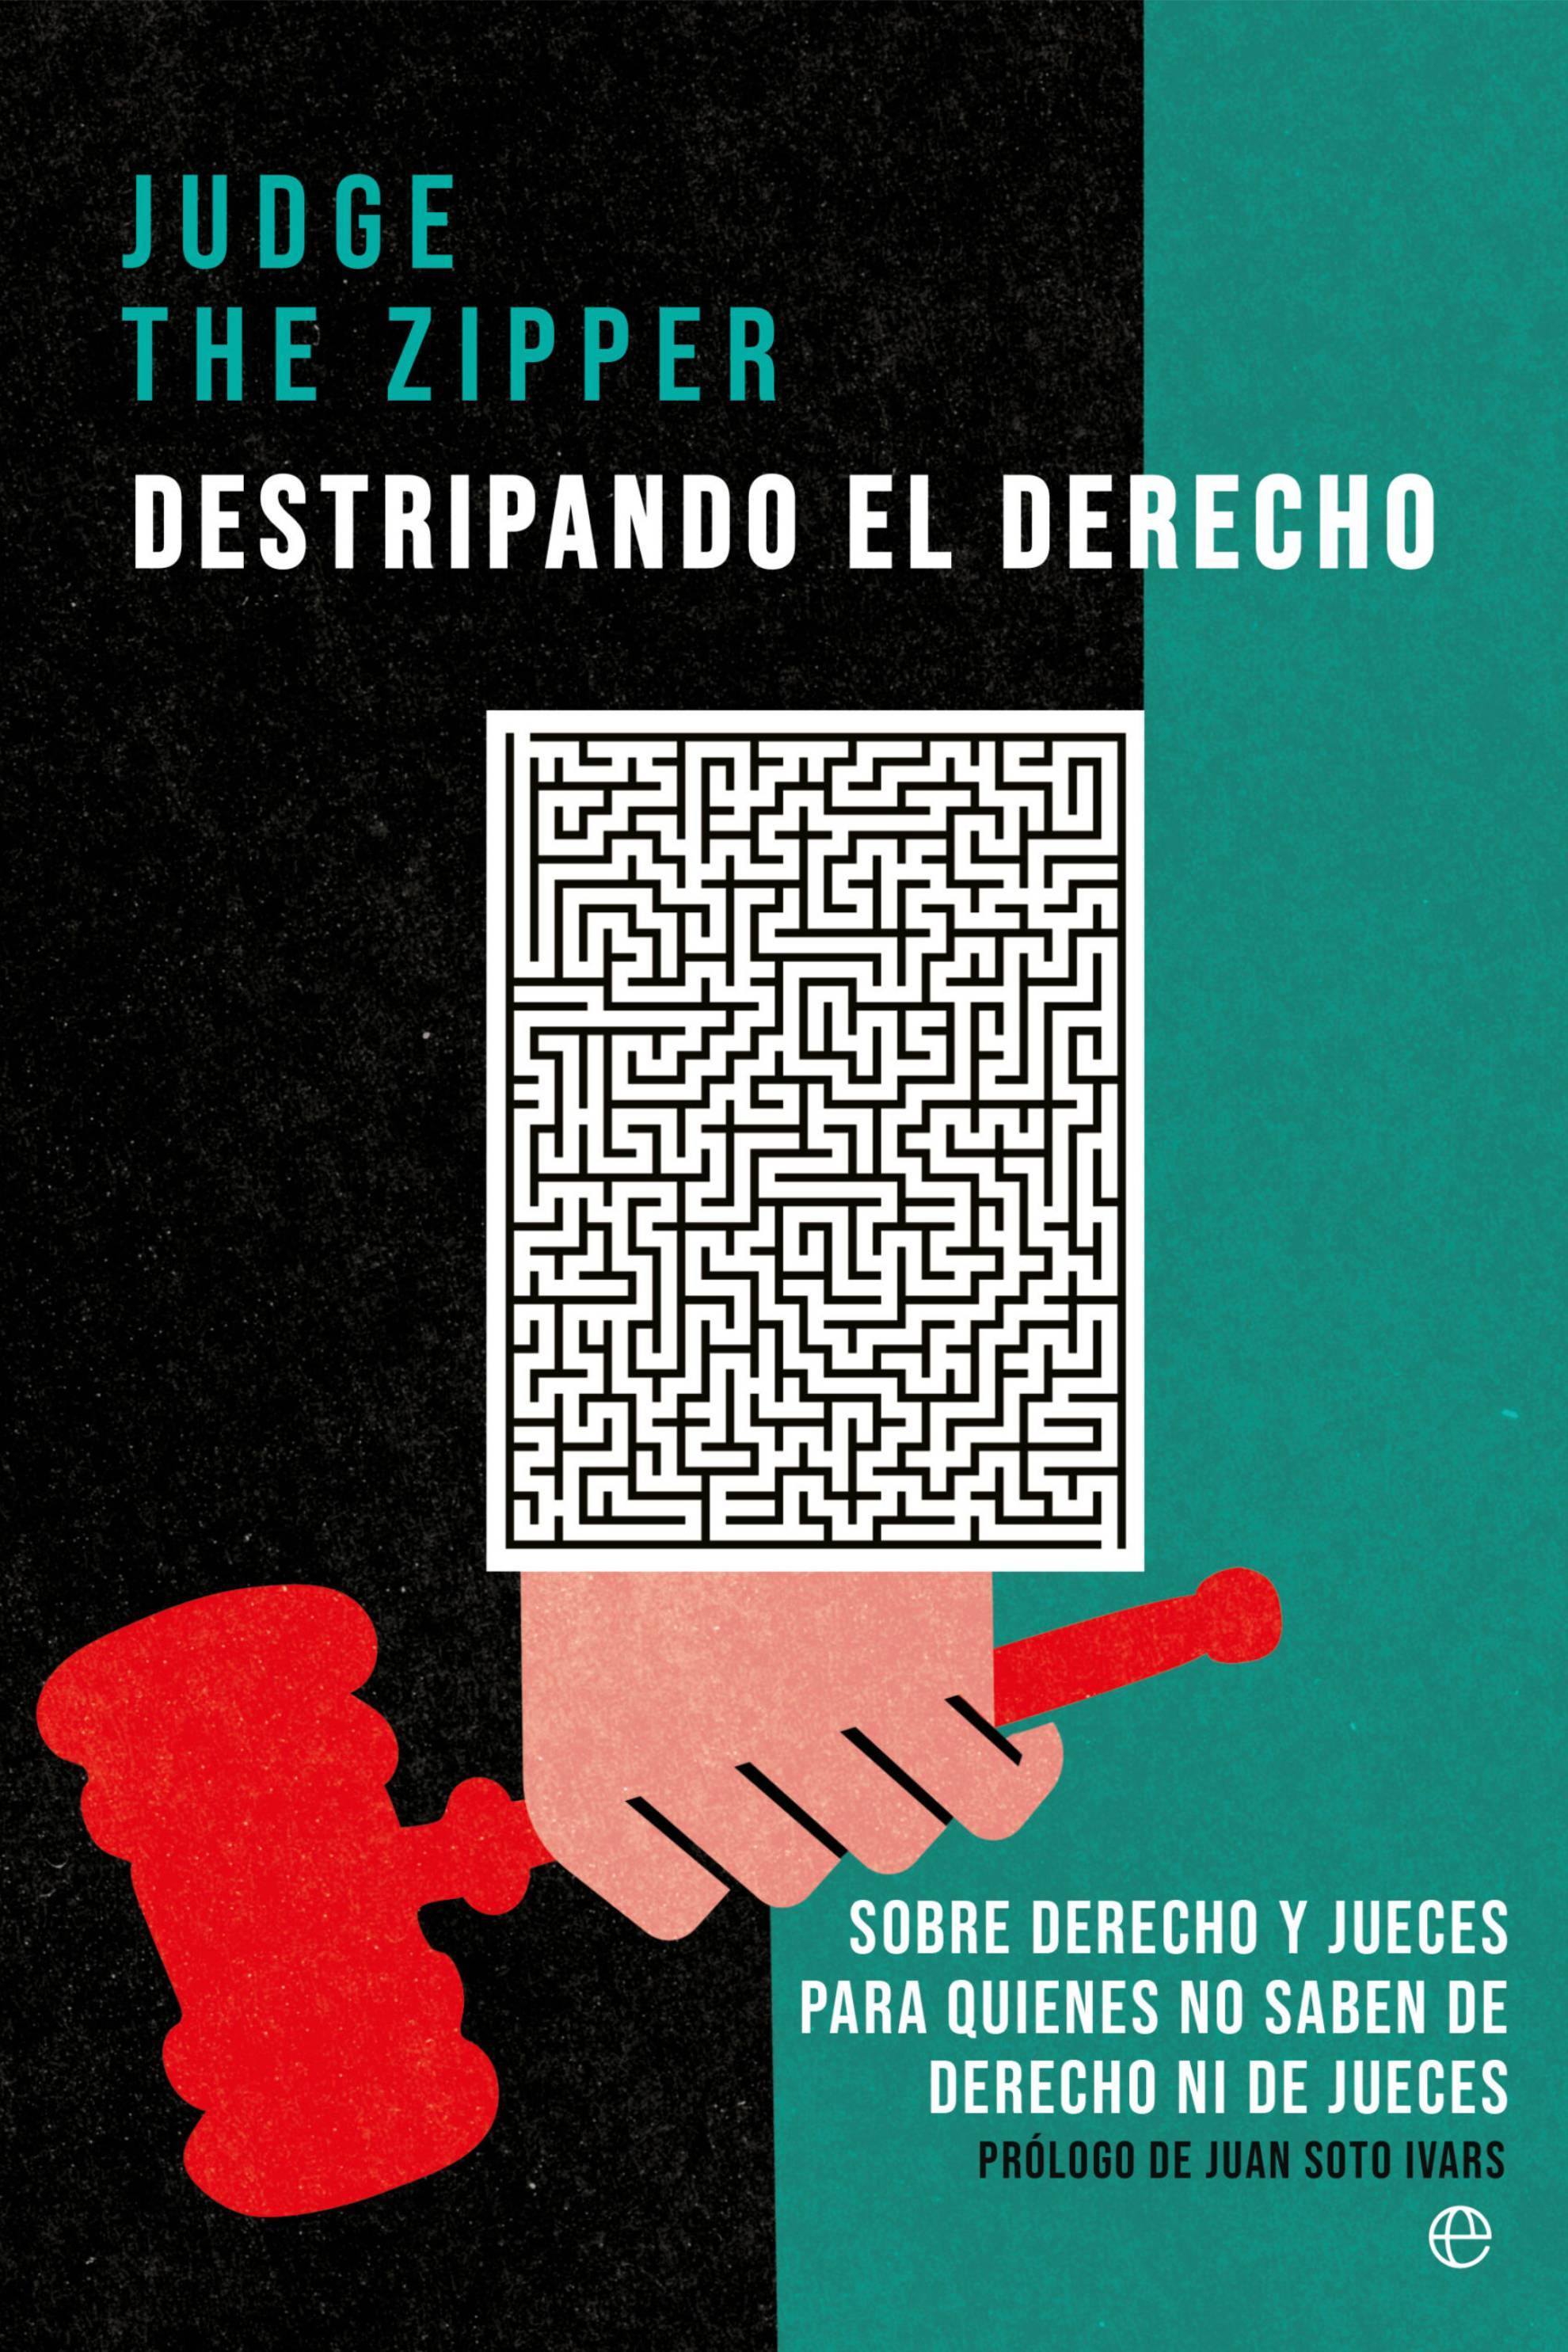 Carátula de 'Destripando el Derecho', libro escrito por Fernando Portillo.